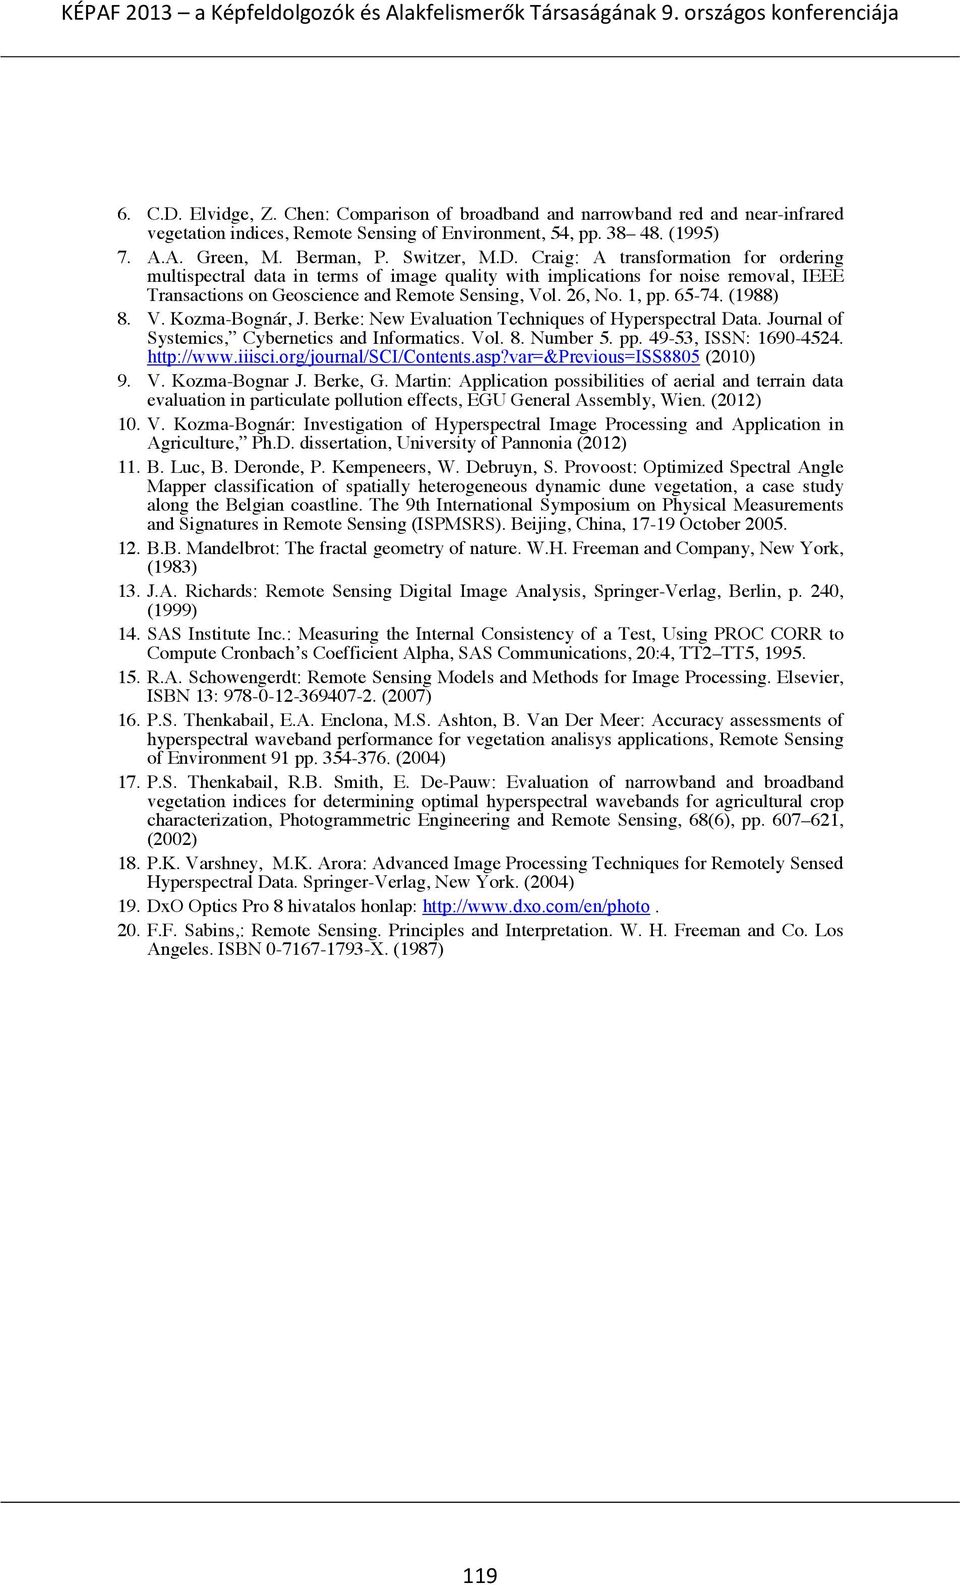 (1988) 8. V. Kozma-Bognár, J. Berke: New Evaluation Techniques of Hyperspectral Data. Journal of Systemics, Cybernetics and Informatics. Vol. 8. Number 5. pp. 49-53, ISSN: 1690-4524. http://www.